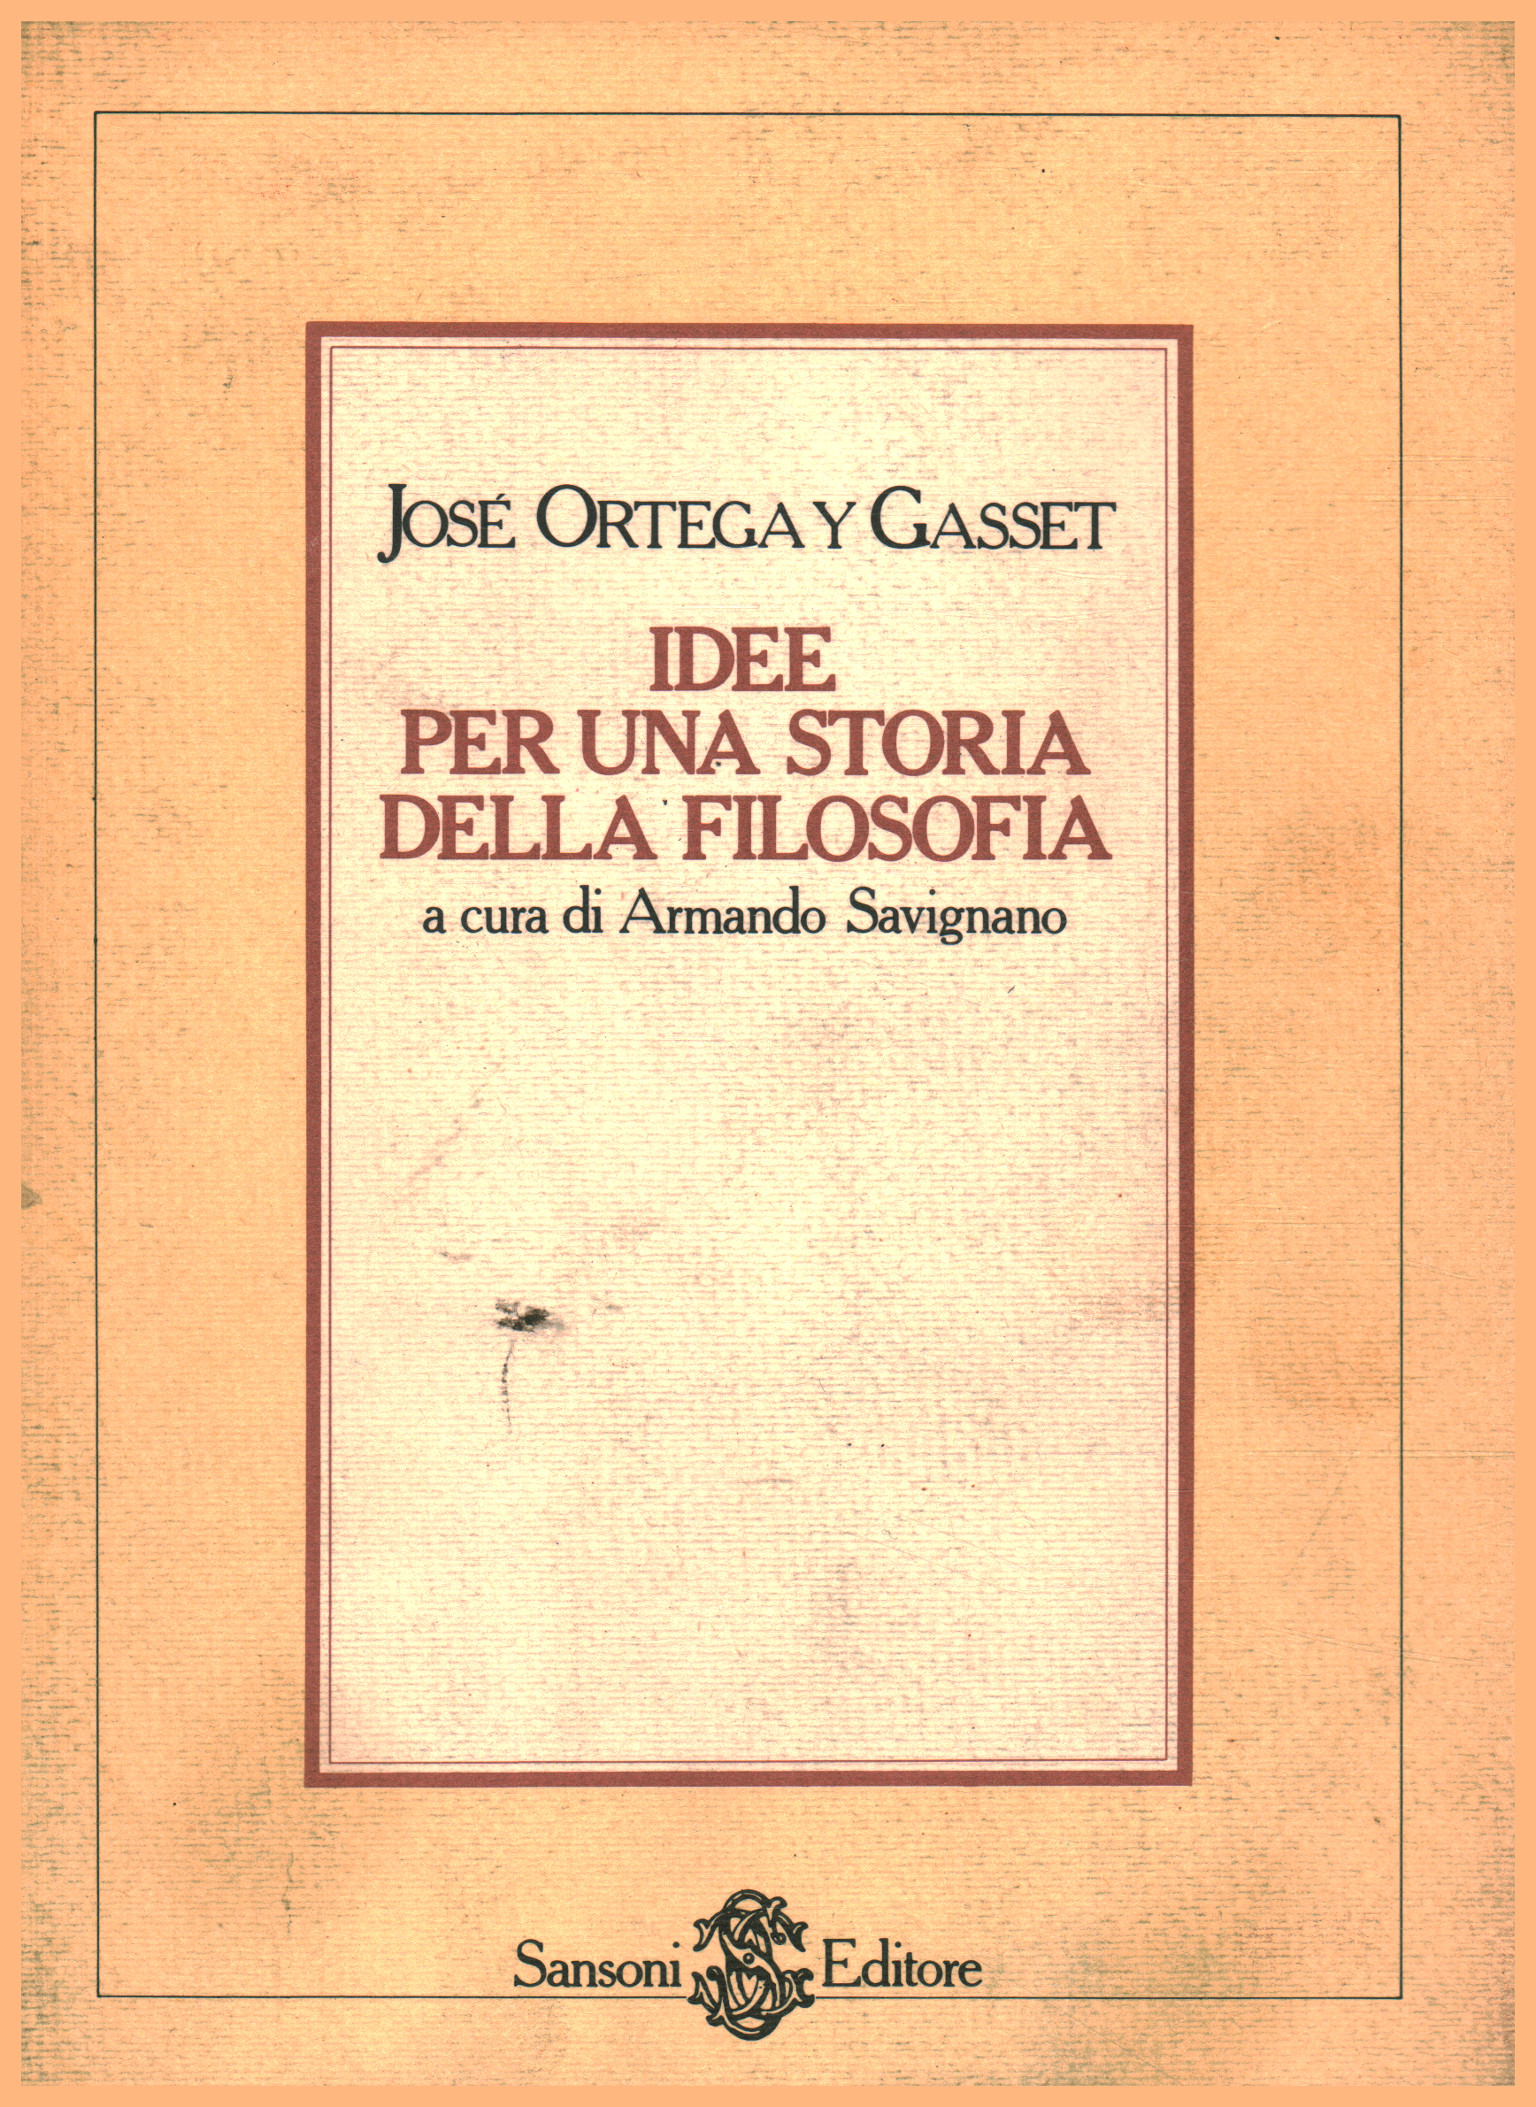 Idee per una storia della filosofia, José Ortega y Gasset